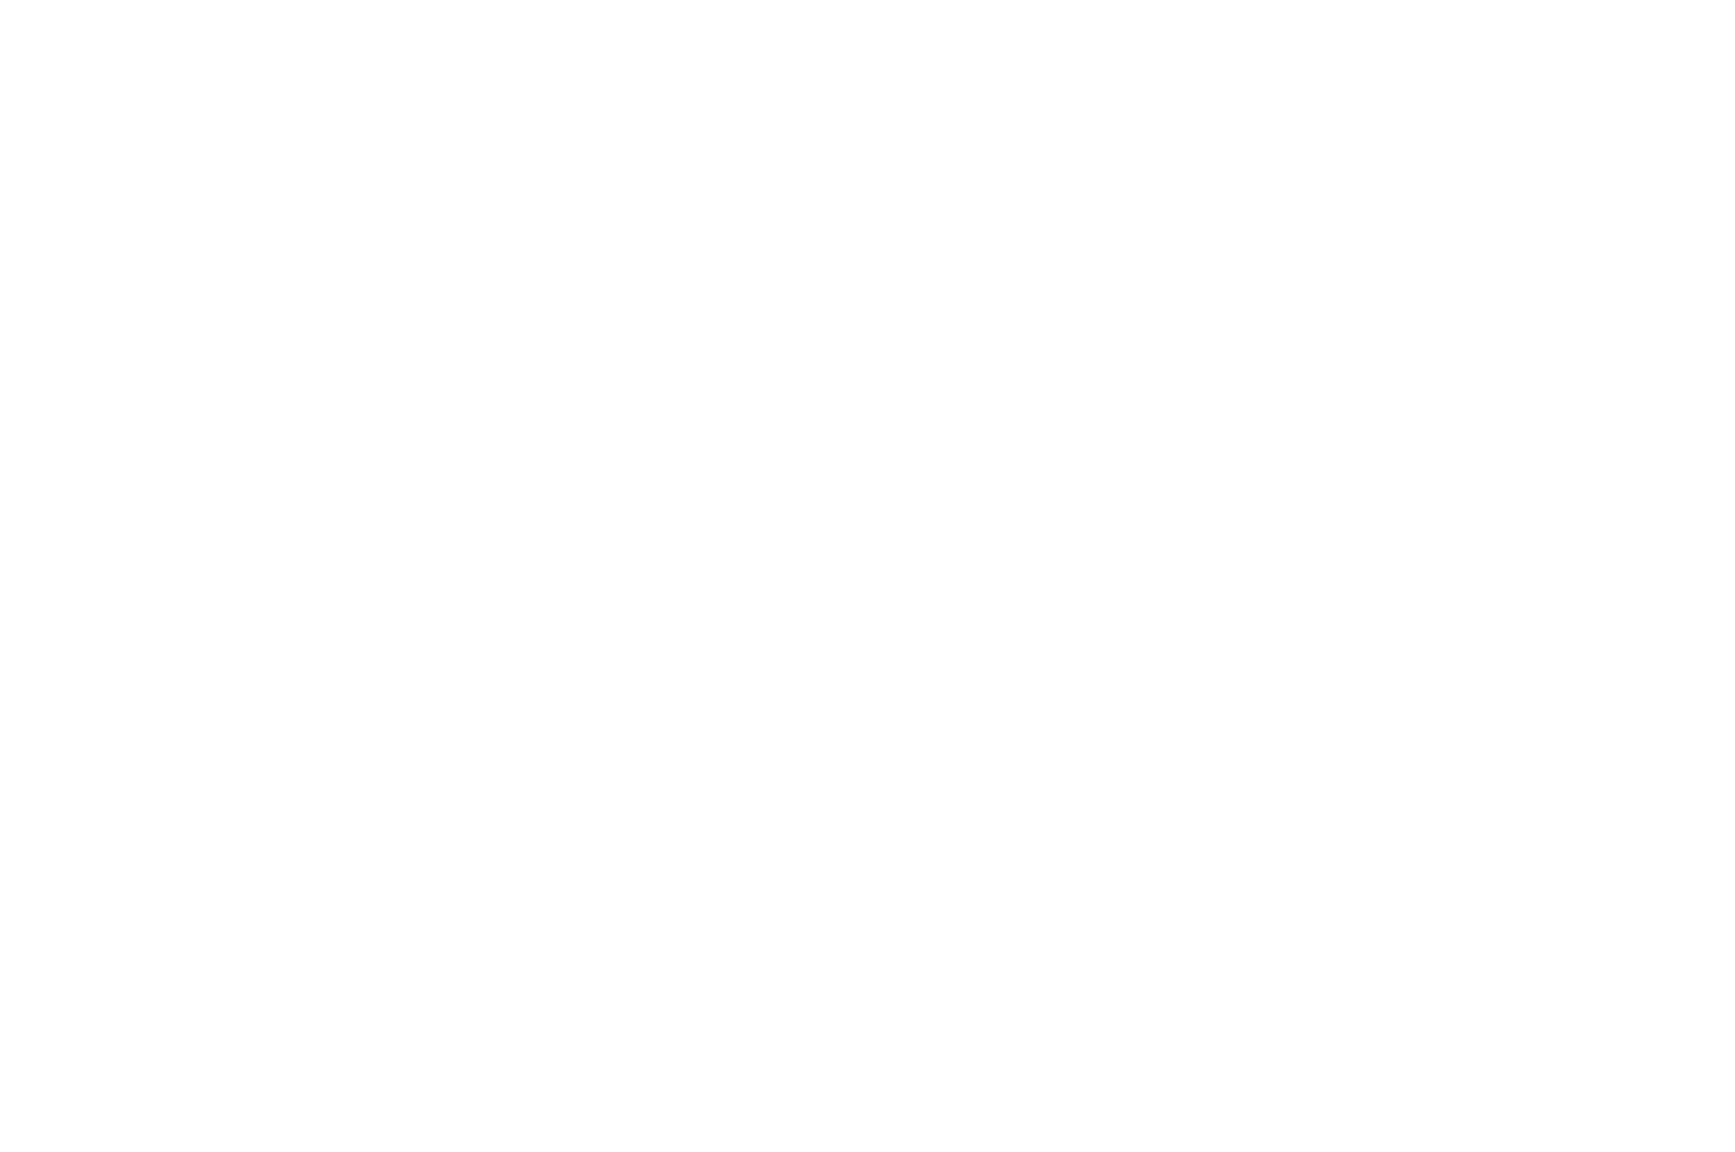 WINNER - BRIDGE FEST - Six Foot Under Noise.png